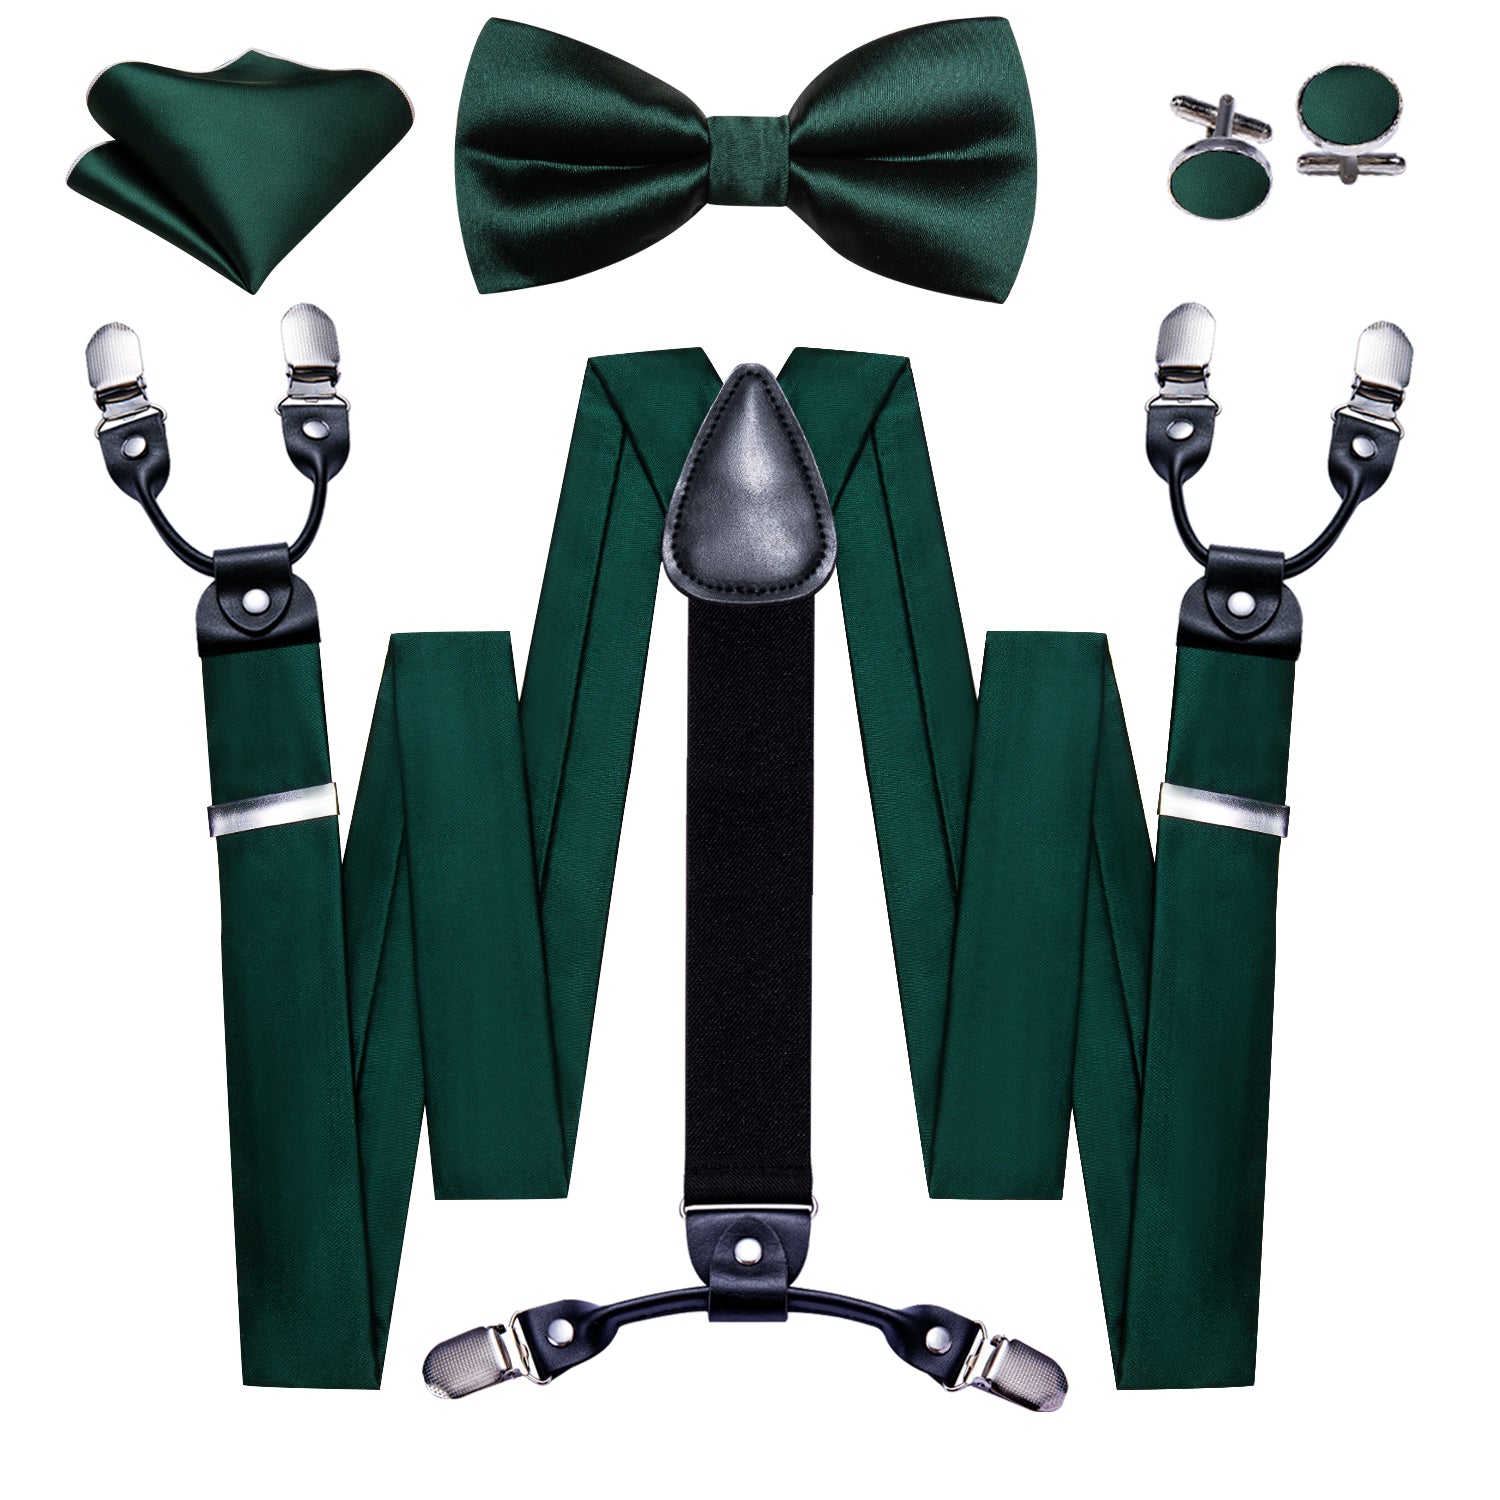 Barry.wang Men's Suspenders Green Solid Y Back Adjustable Bow Tie Suspenders Set